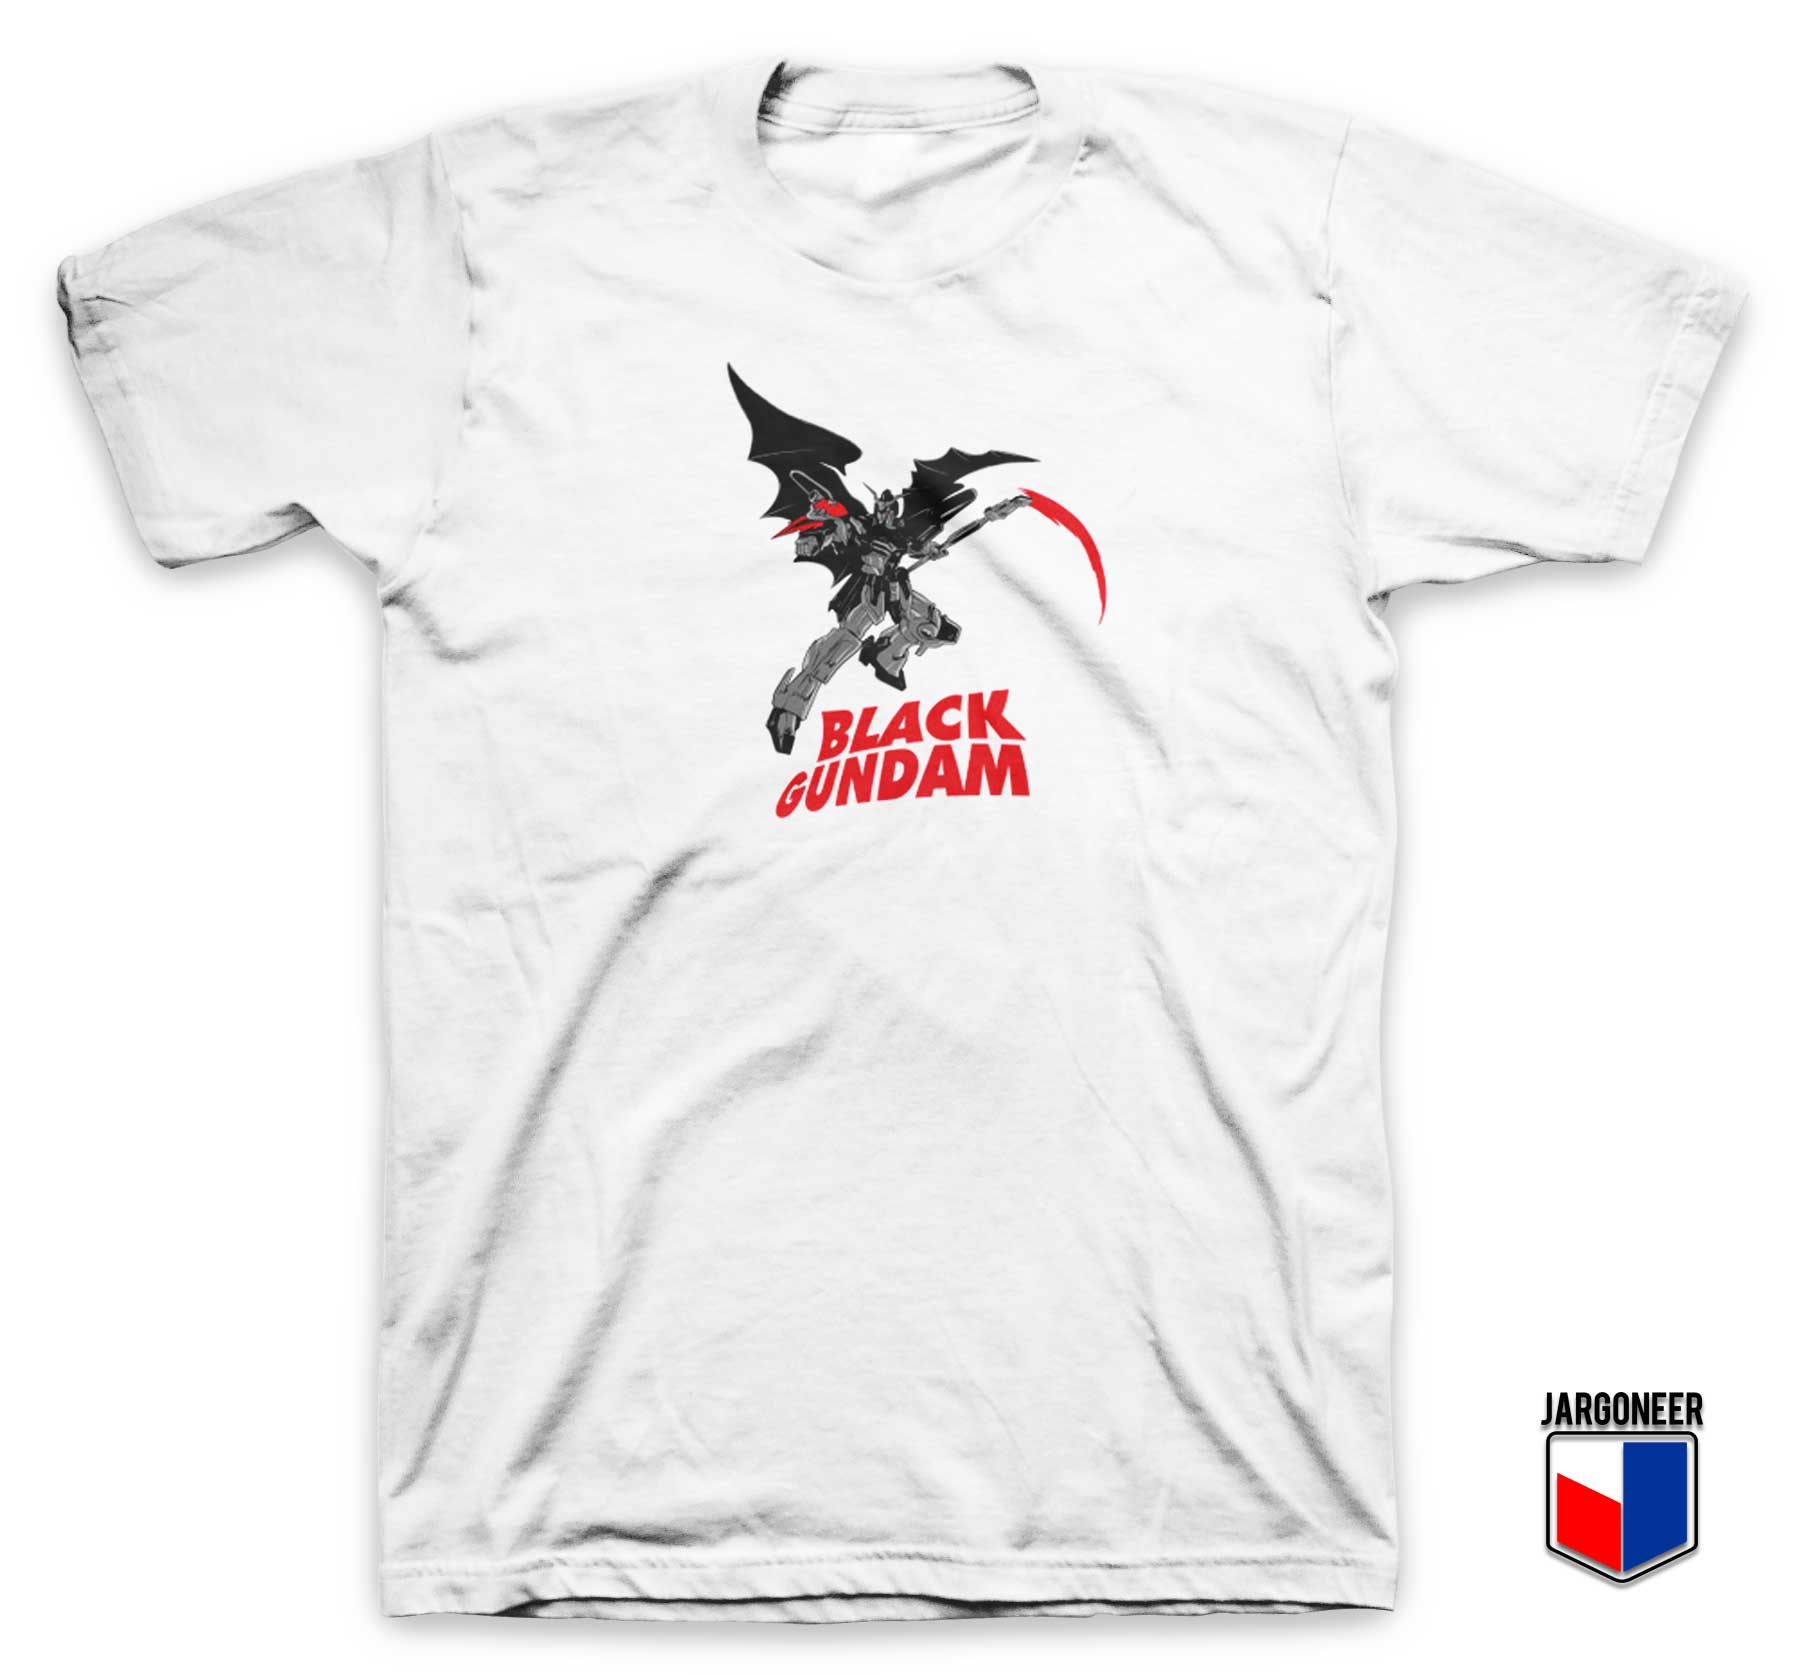 Black Gundam Deathscythe T Shirt - Shop Unique Graphic Cool Shirt Designs